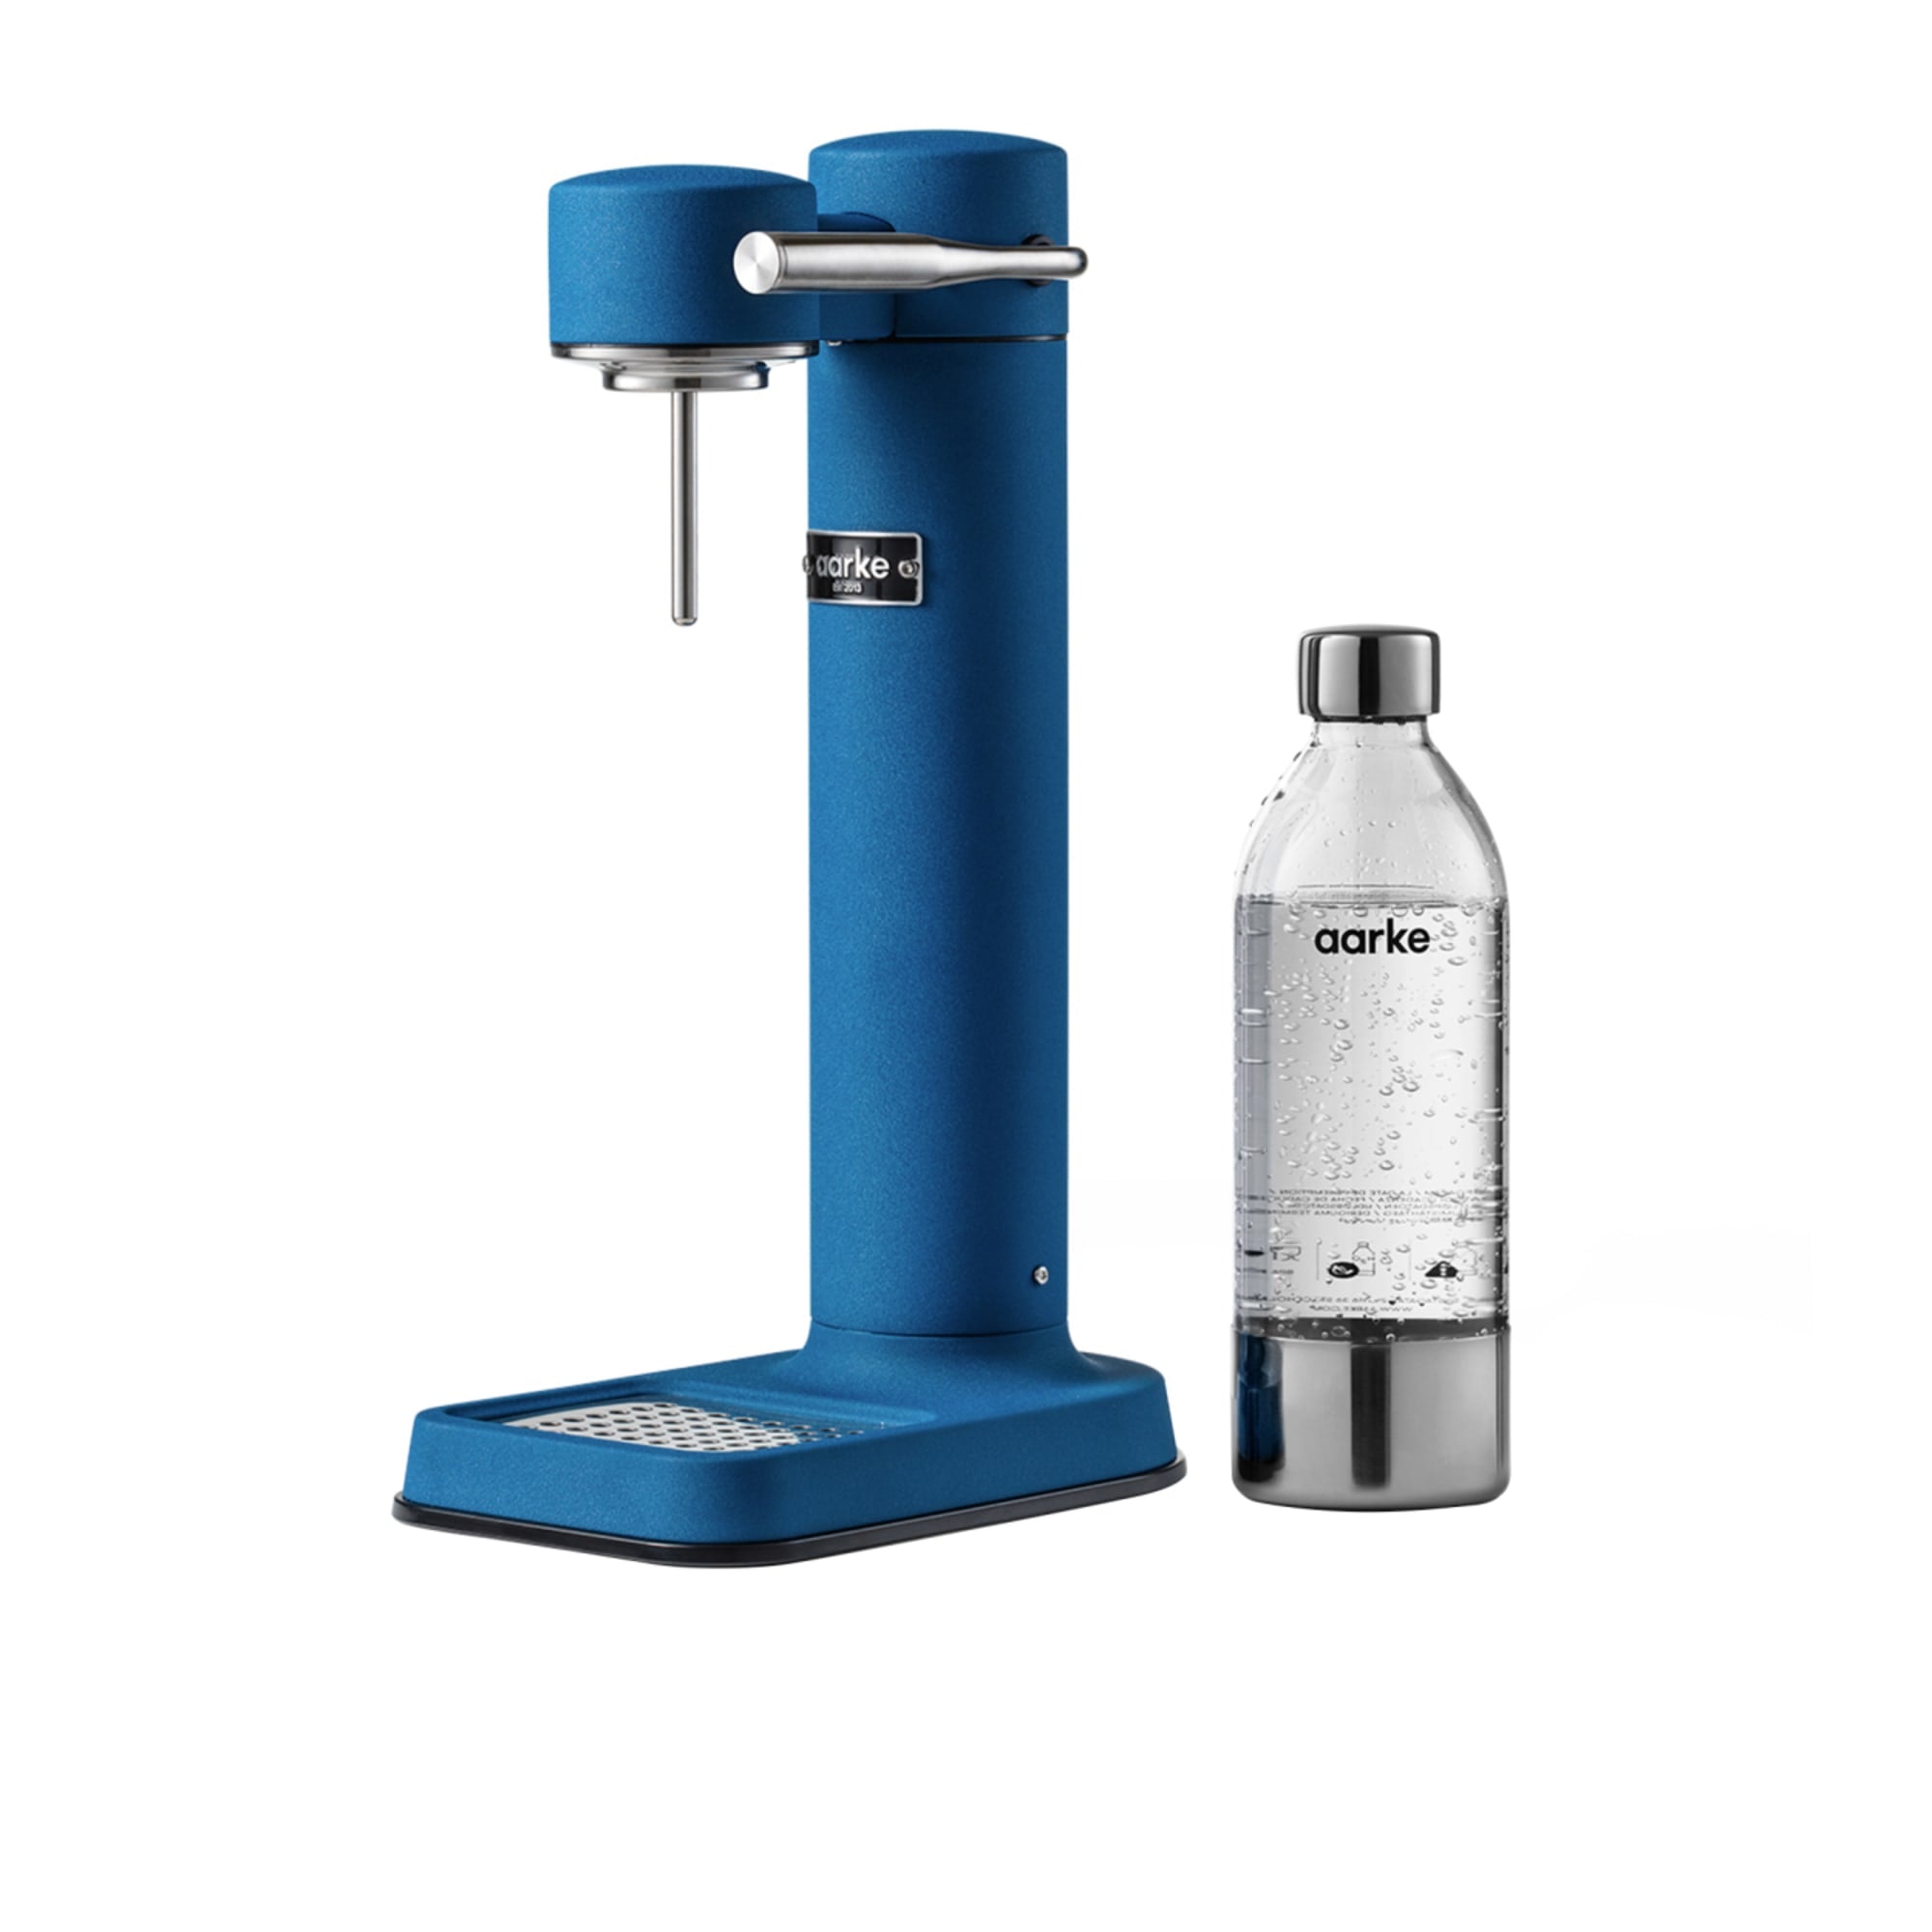 AARKE Carbonator 3 瑞典進口氣泡水機-藍色